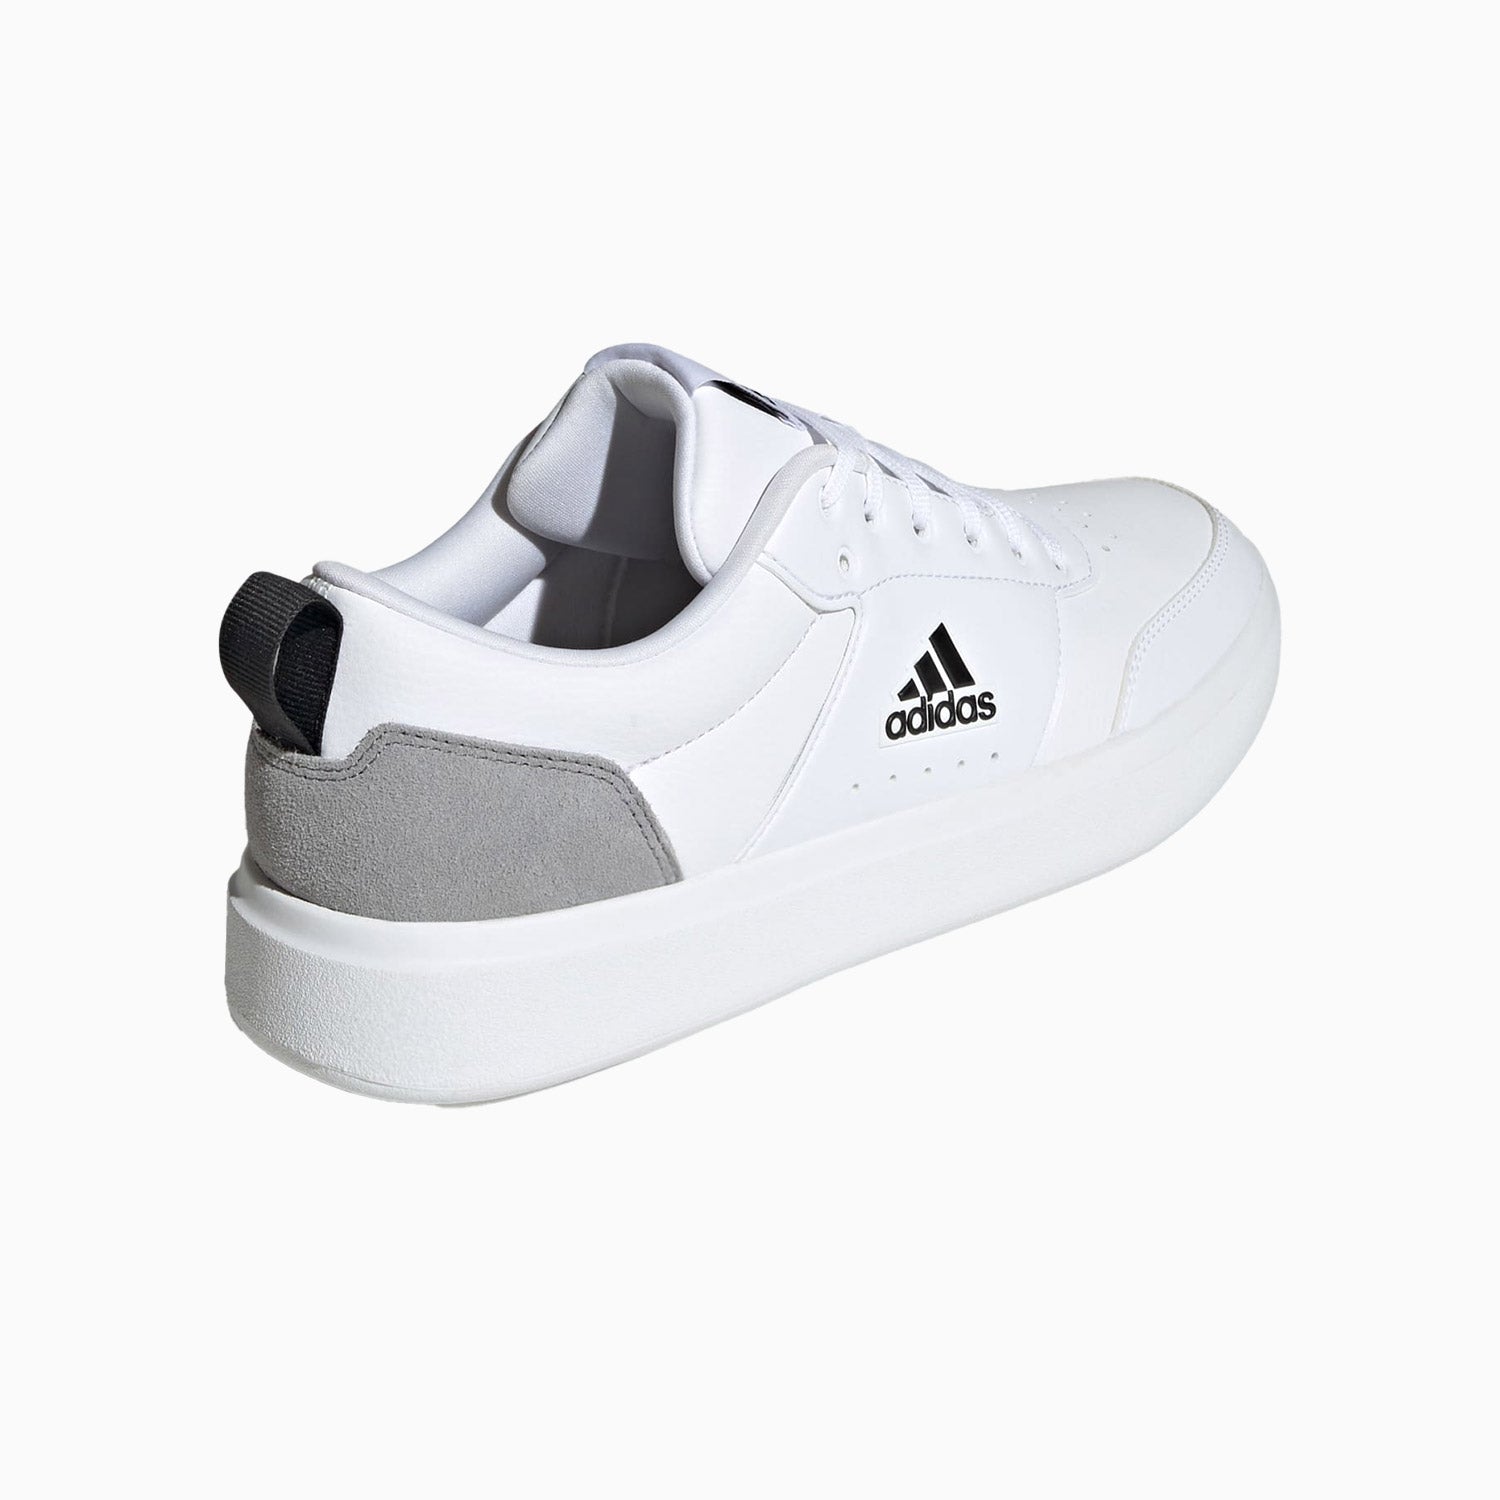 adidas-mens-park-street-cloud-white-black-shoes-ig9849